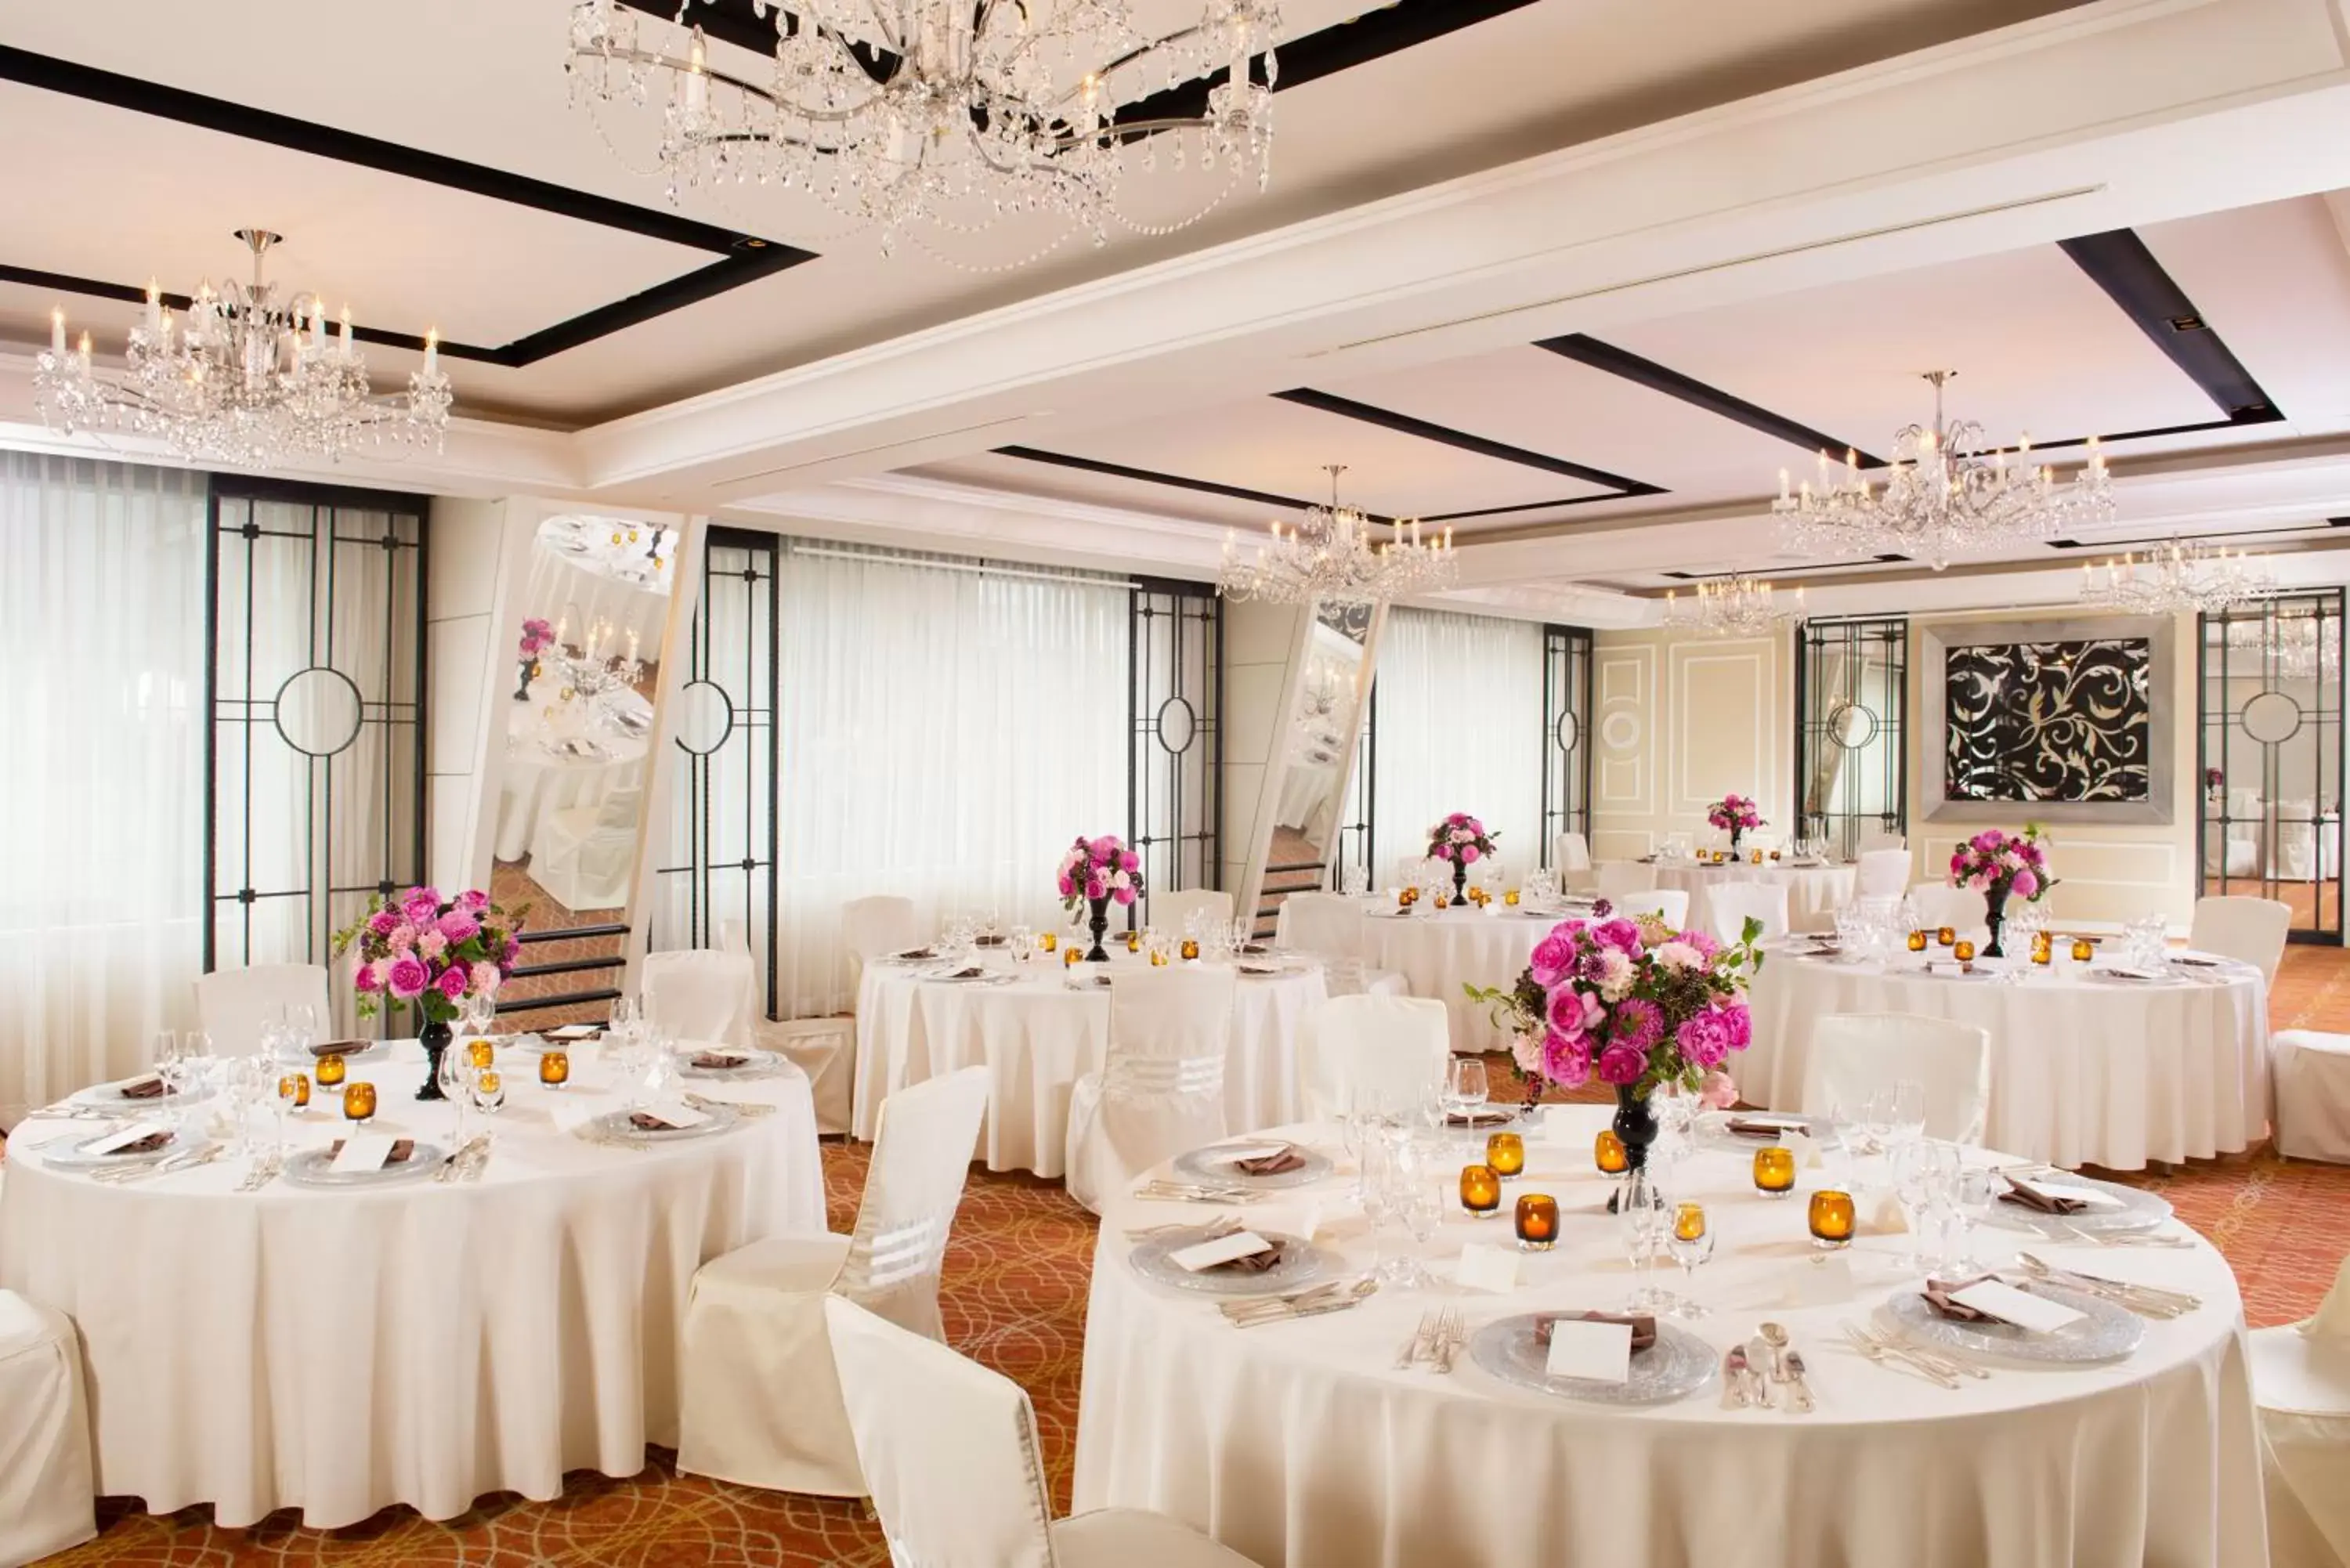 Banquet/Function facilities, Banquet Facilities in Hotel Nikko Osaka